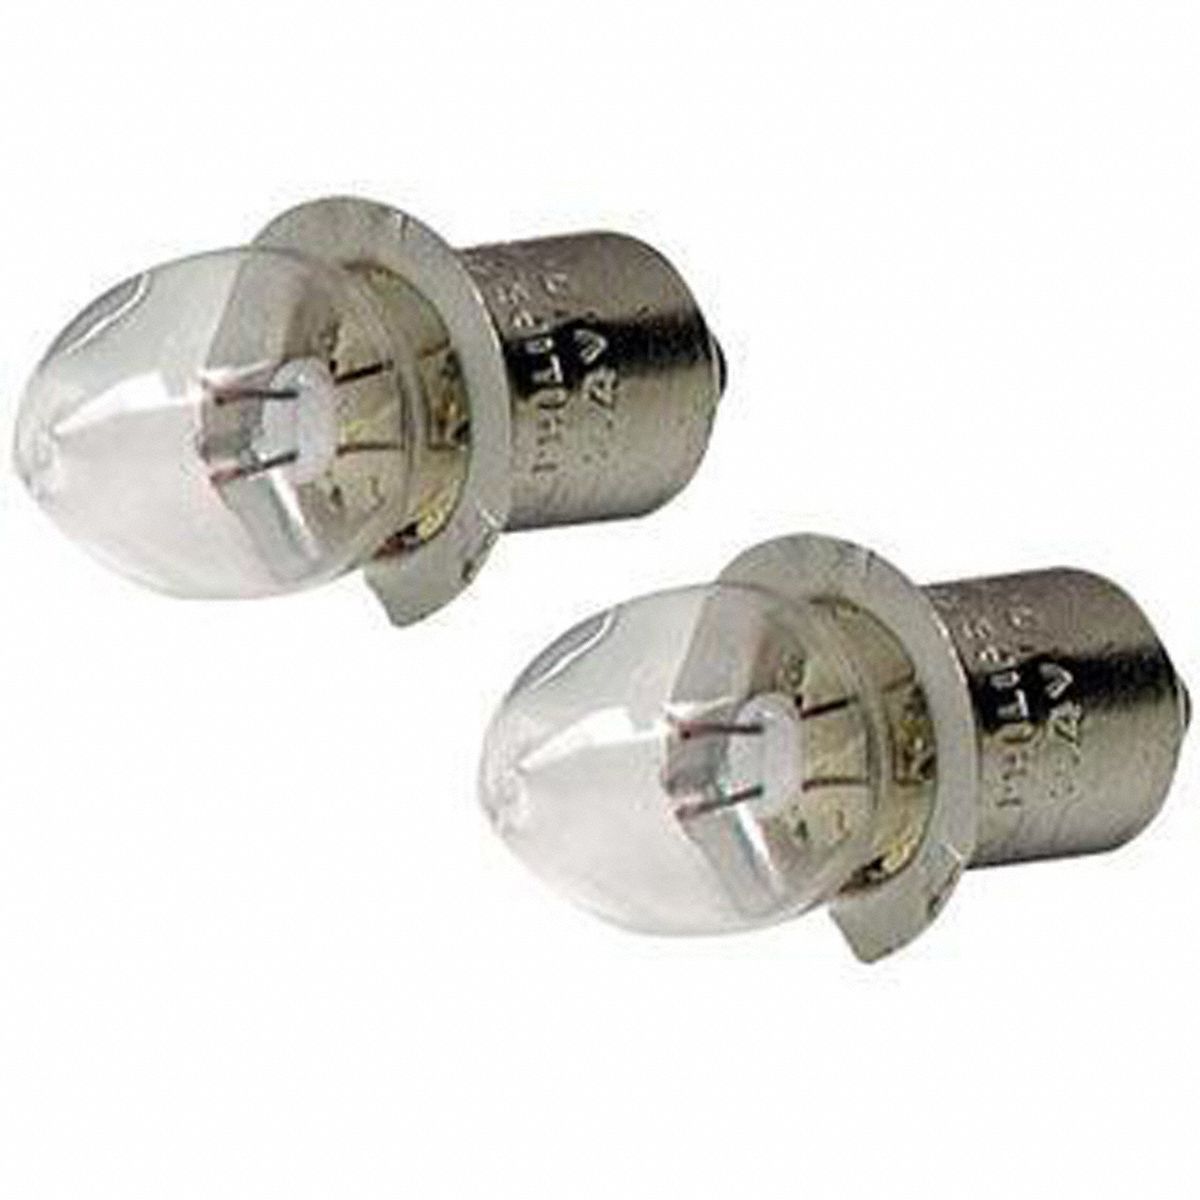 Incandescent Work Light Replacement Bulb for Miliwaukee 18V Work Lights, 2PK